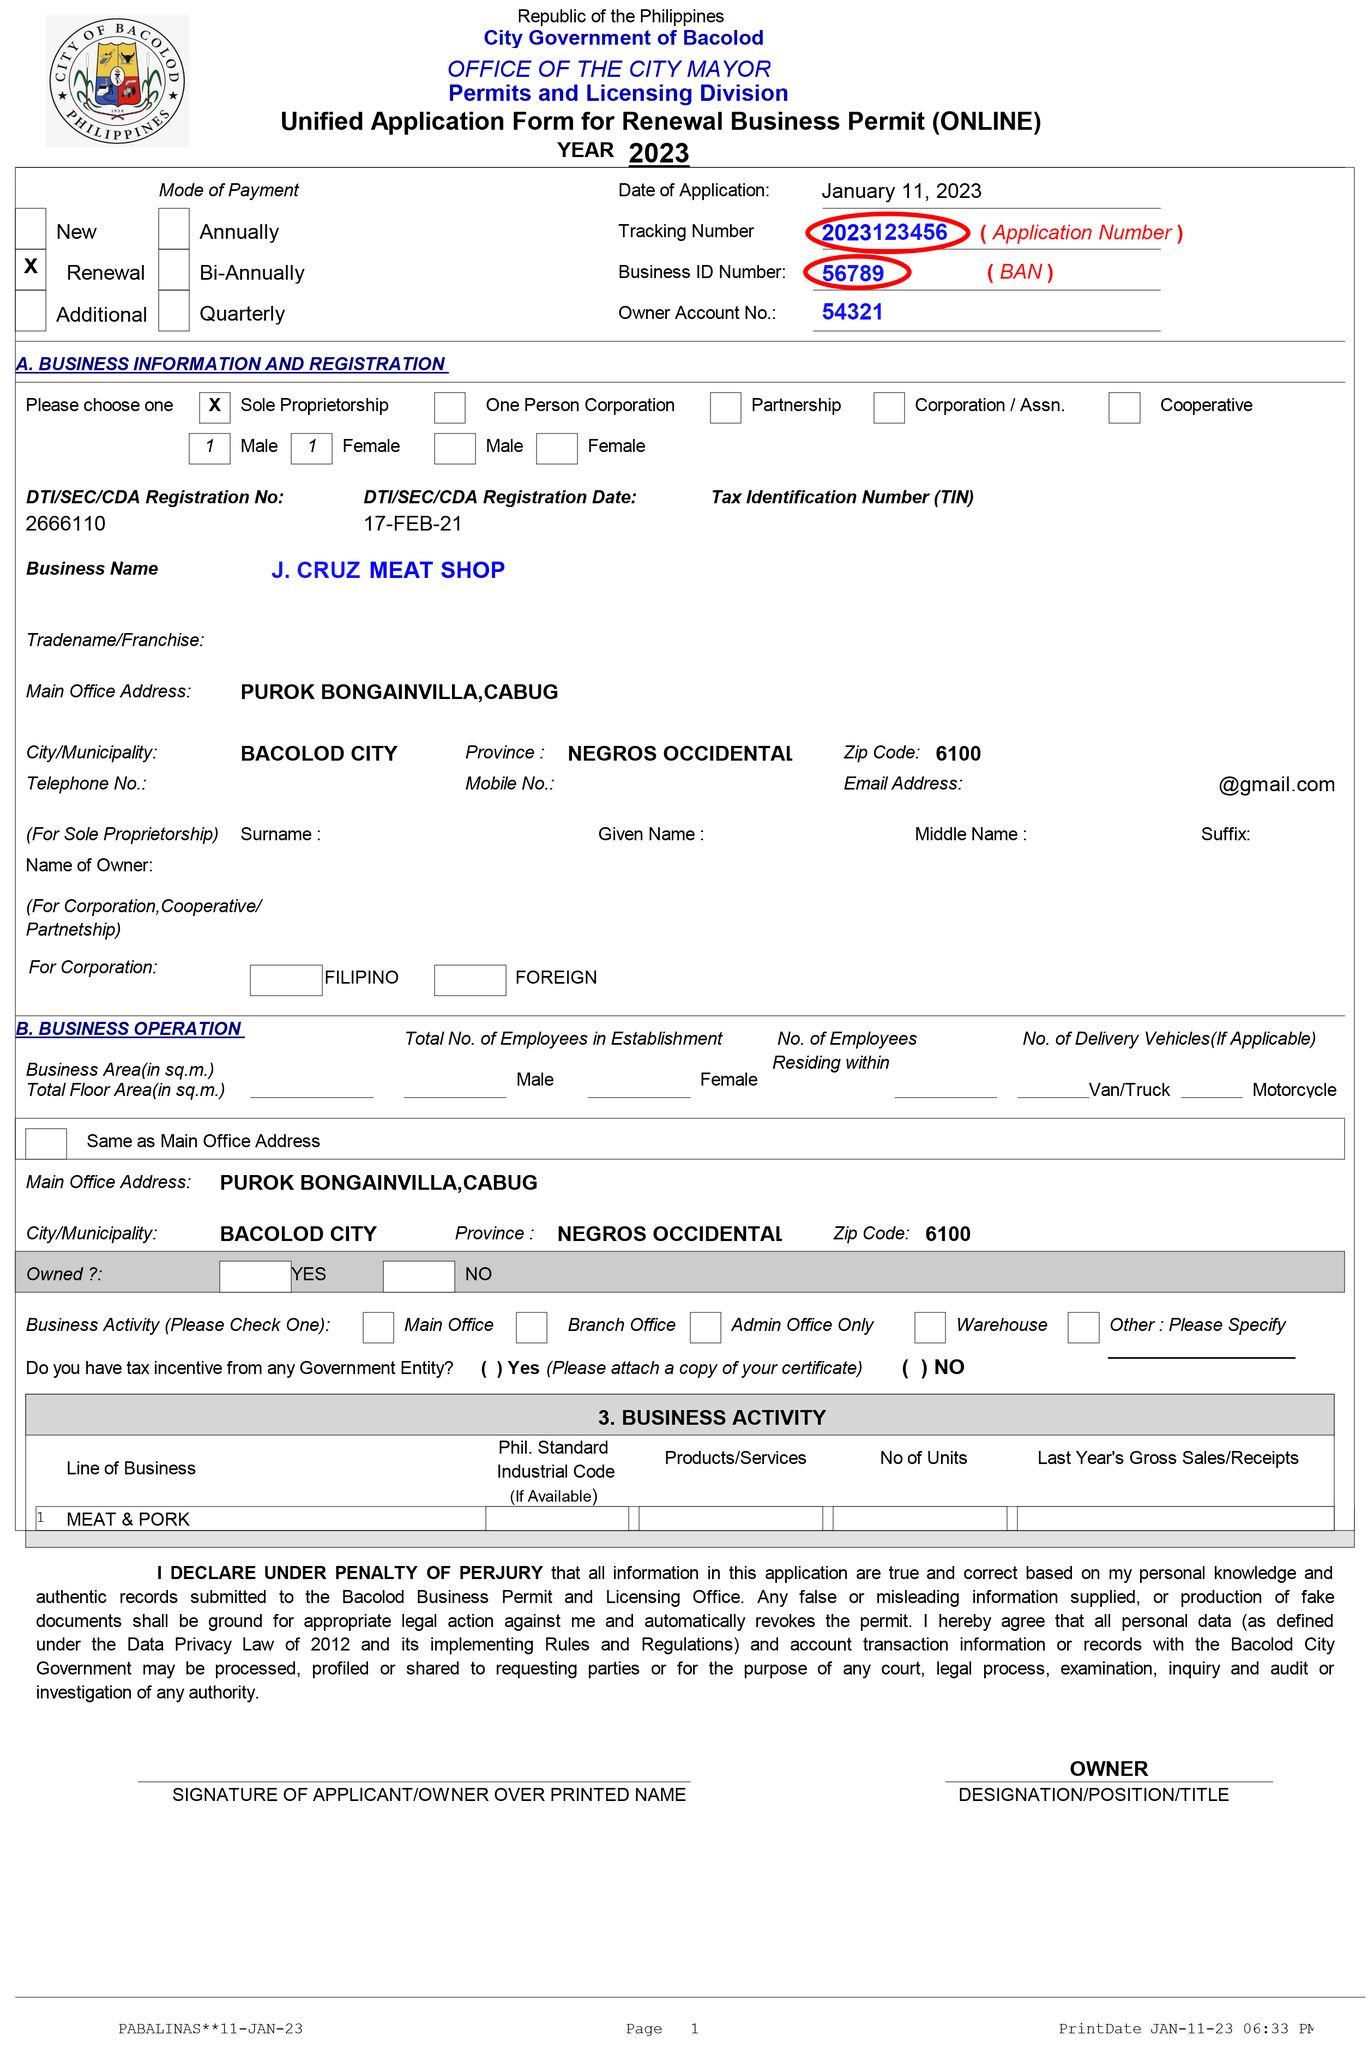 Business Permit - Online Application Form